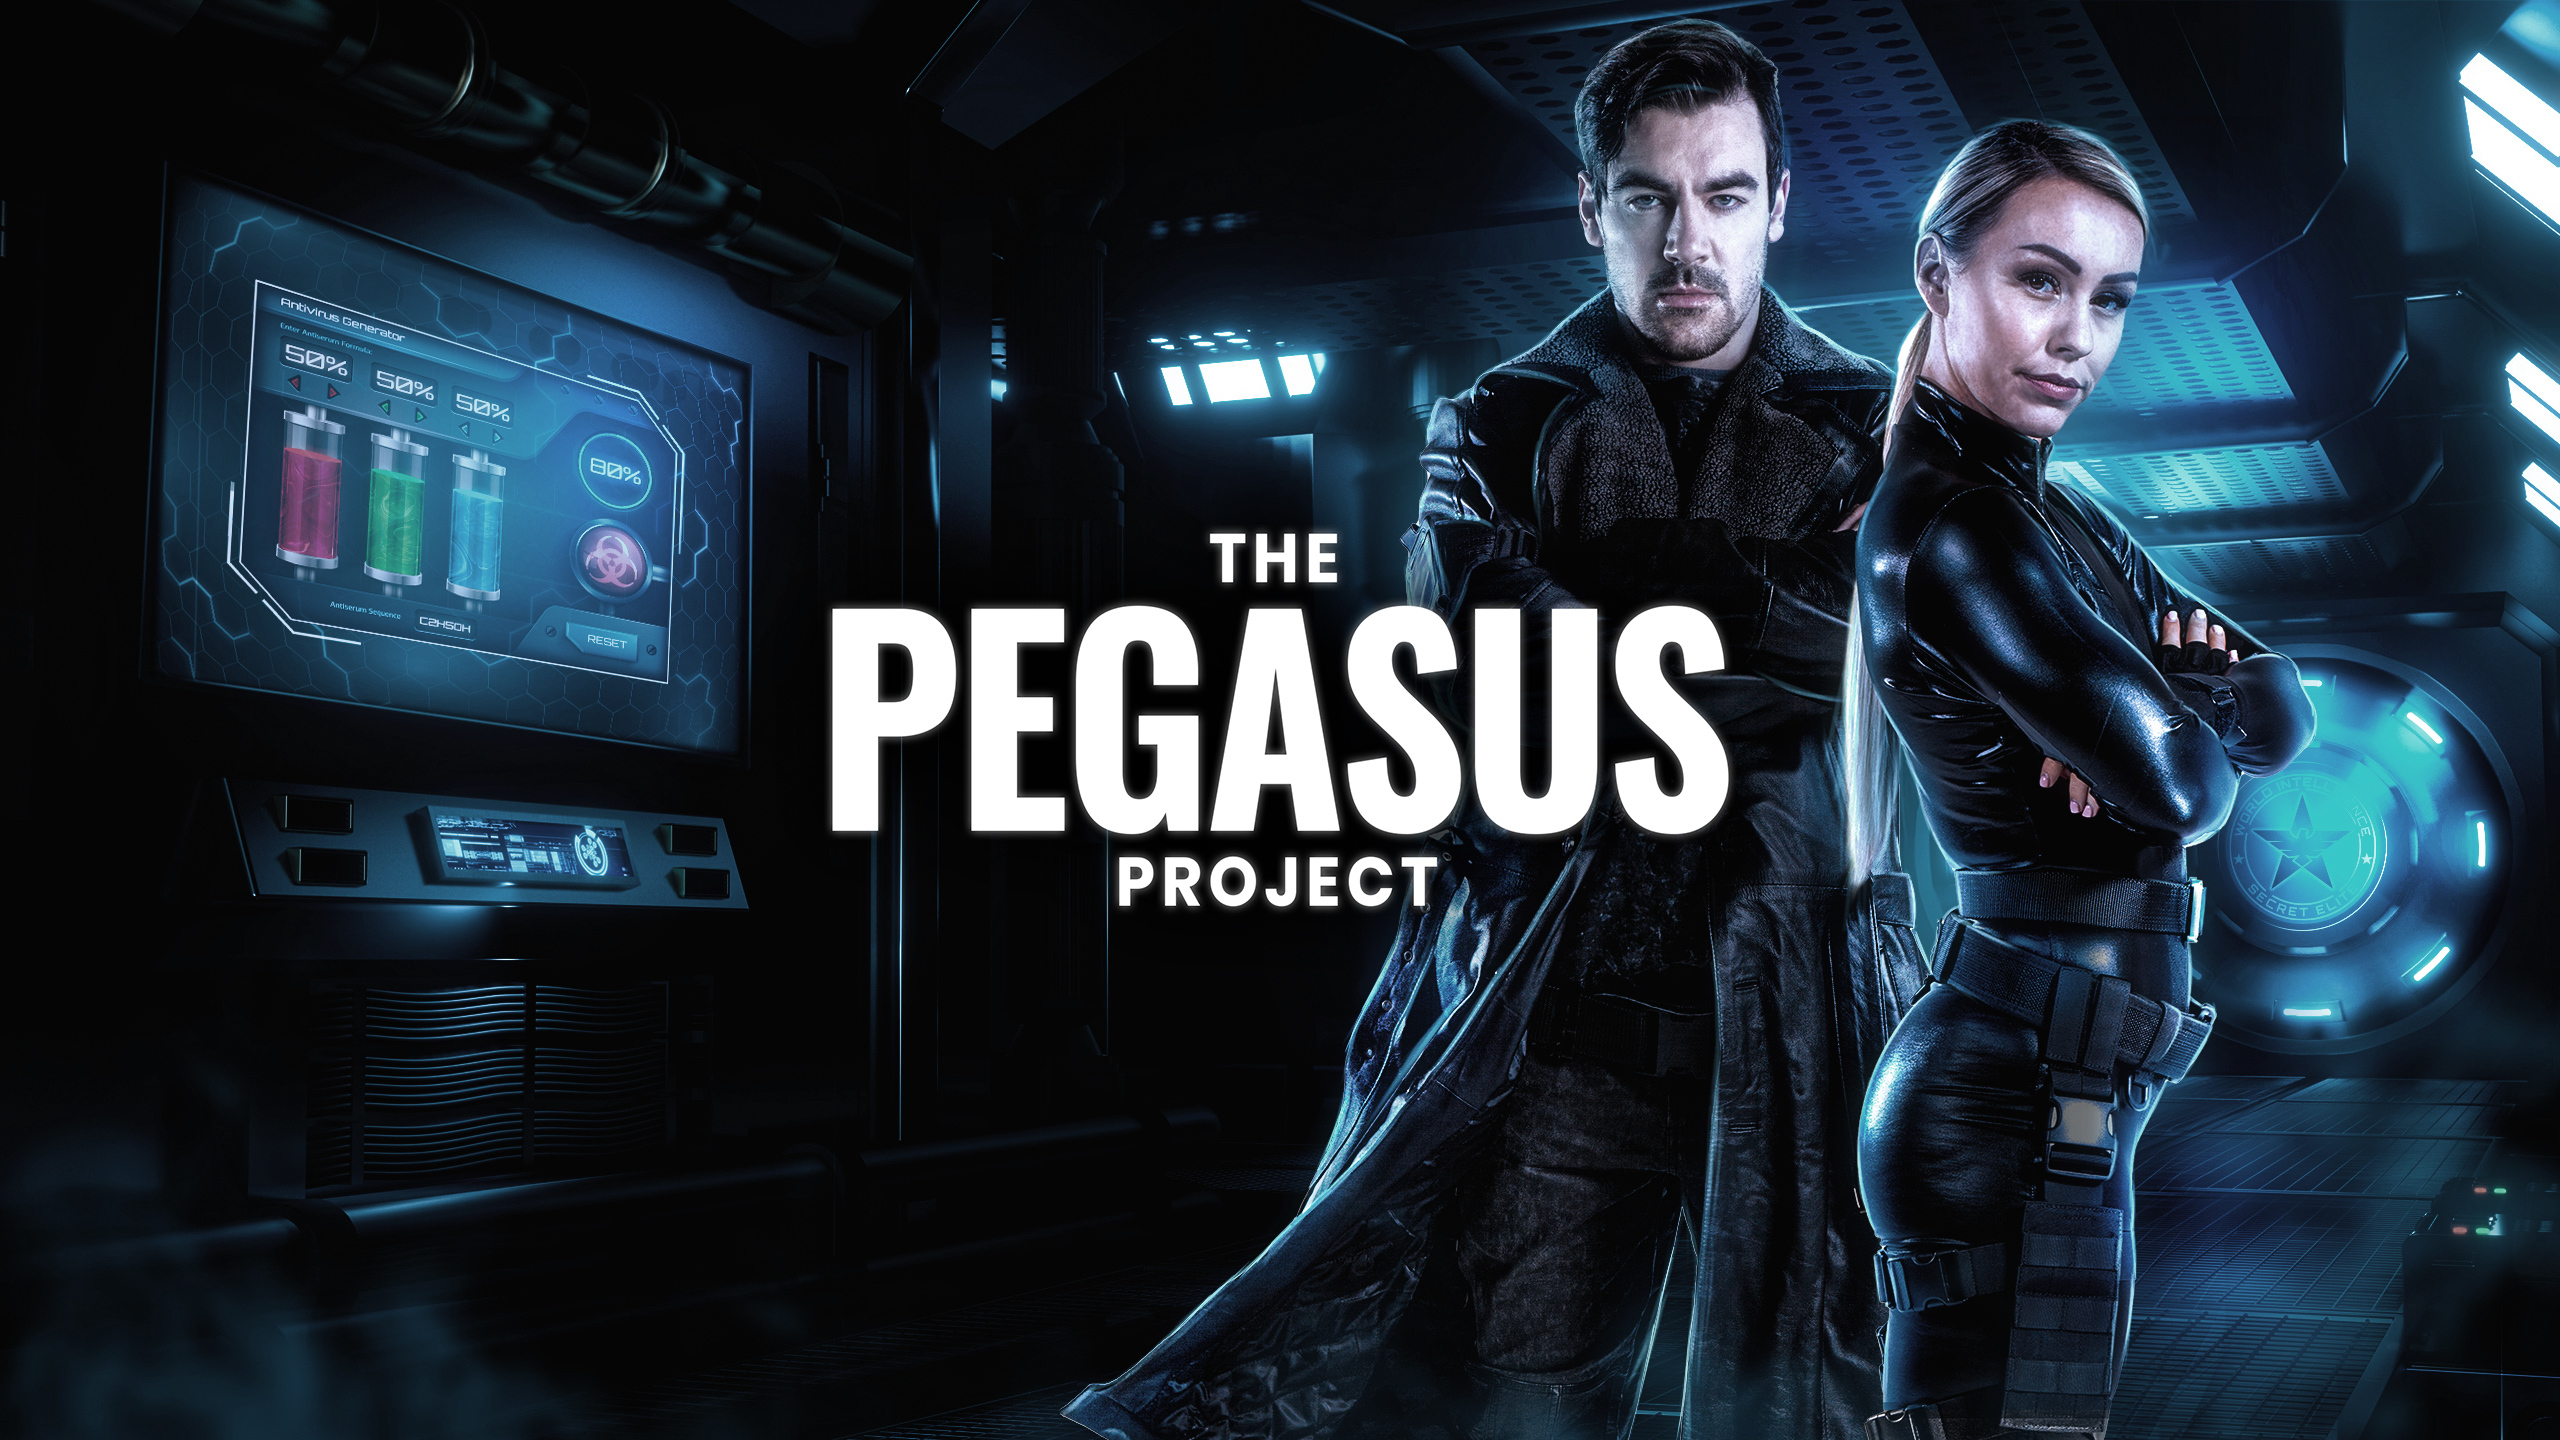 Bedrijfsuitje Groningen: Online escape game The Pegasus